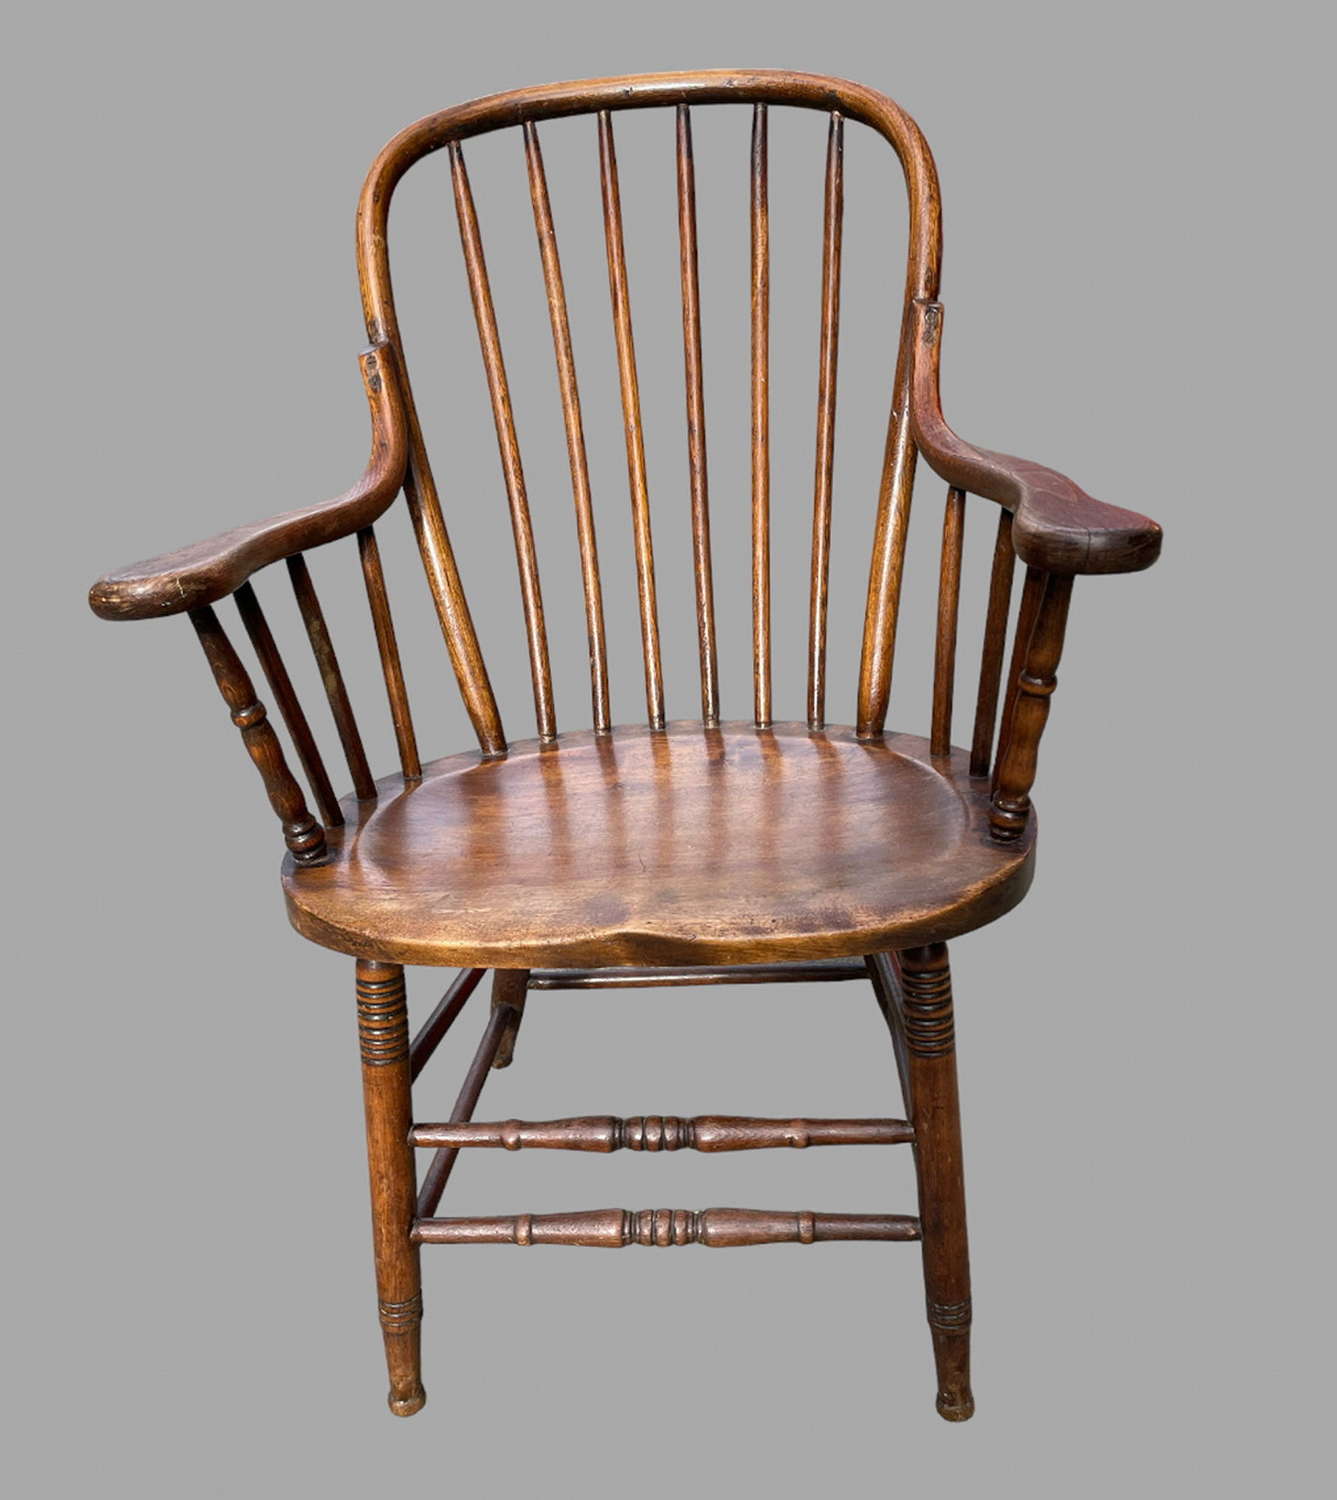 A 19thc Mahogany Windsor Chair